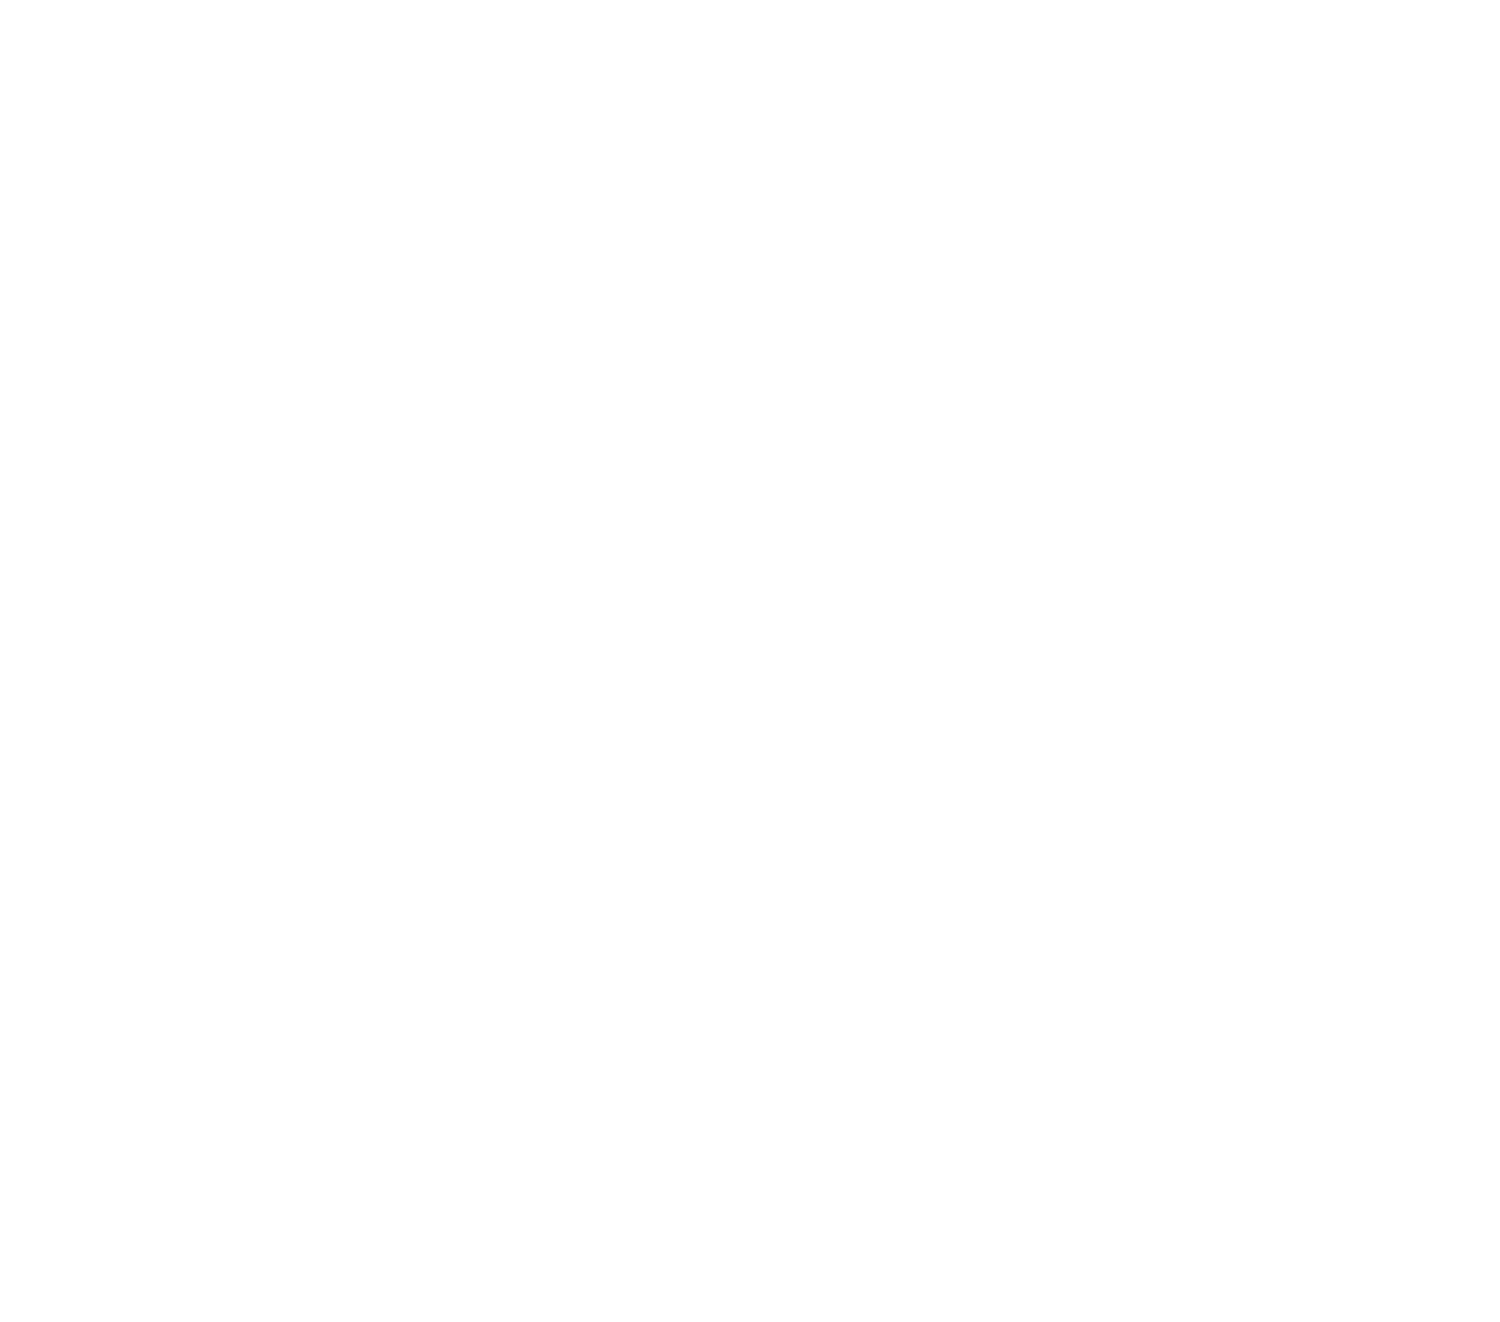 Pam Morrison